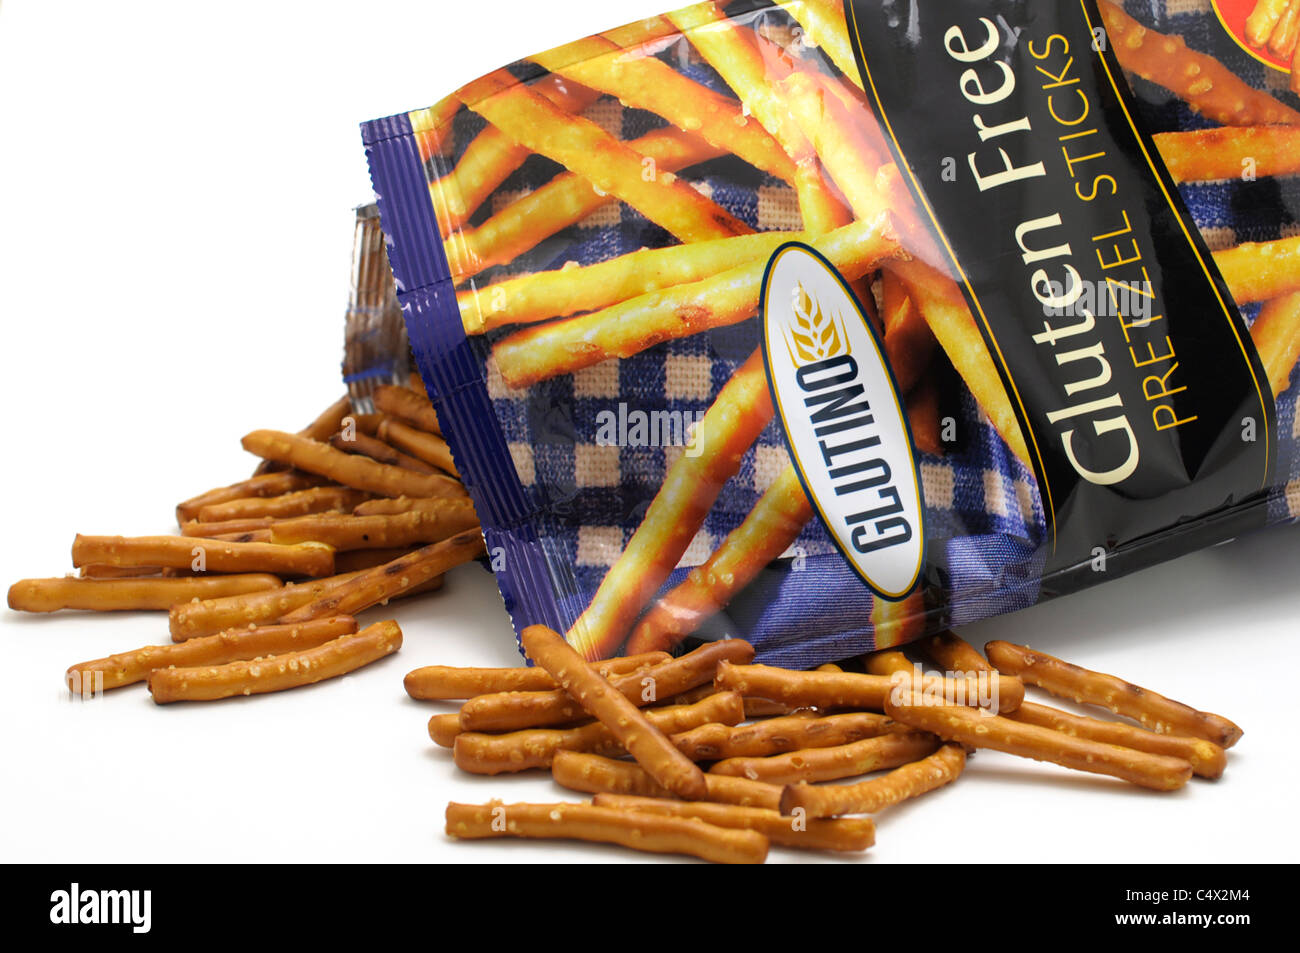 Productos alimenticios sin gluten, Pretzel sticks Foto de stock